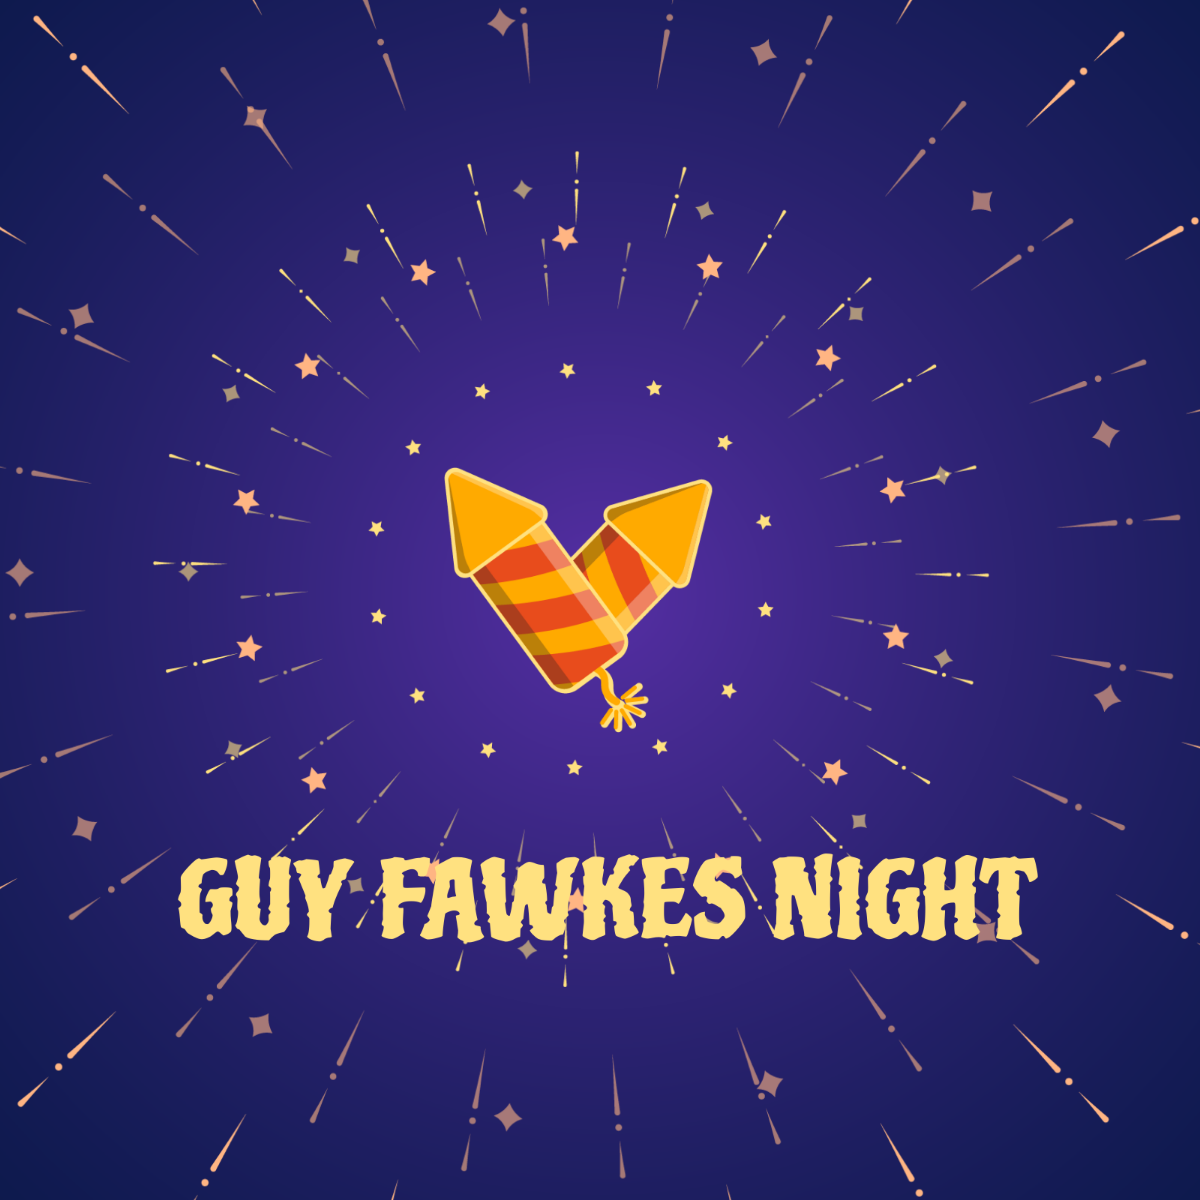 Free Guy Fawkes Night WhatsApp Post Template